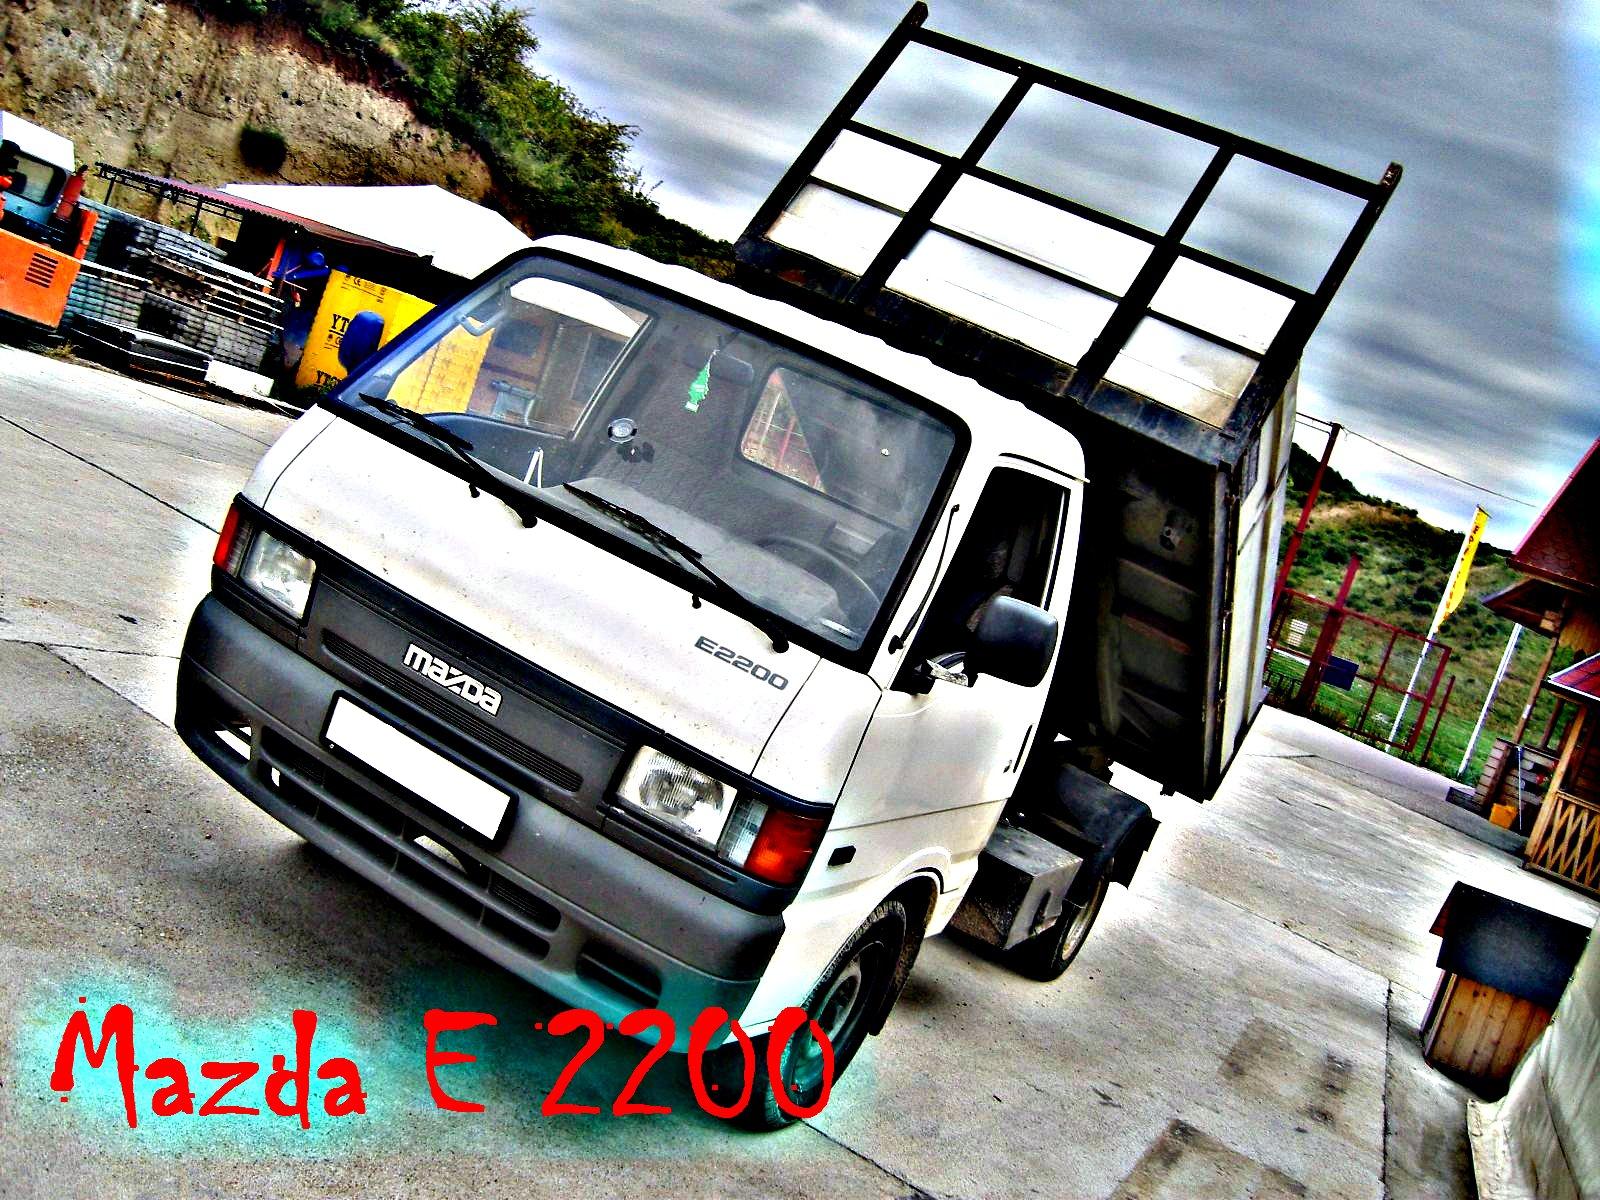 Mazdus :: E2200 Teherhordó™